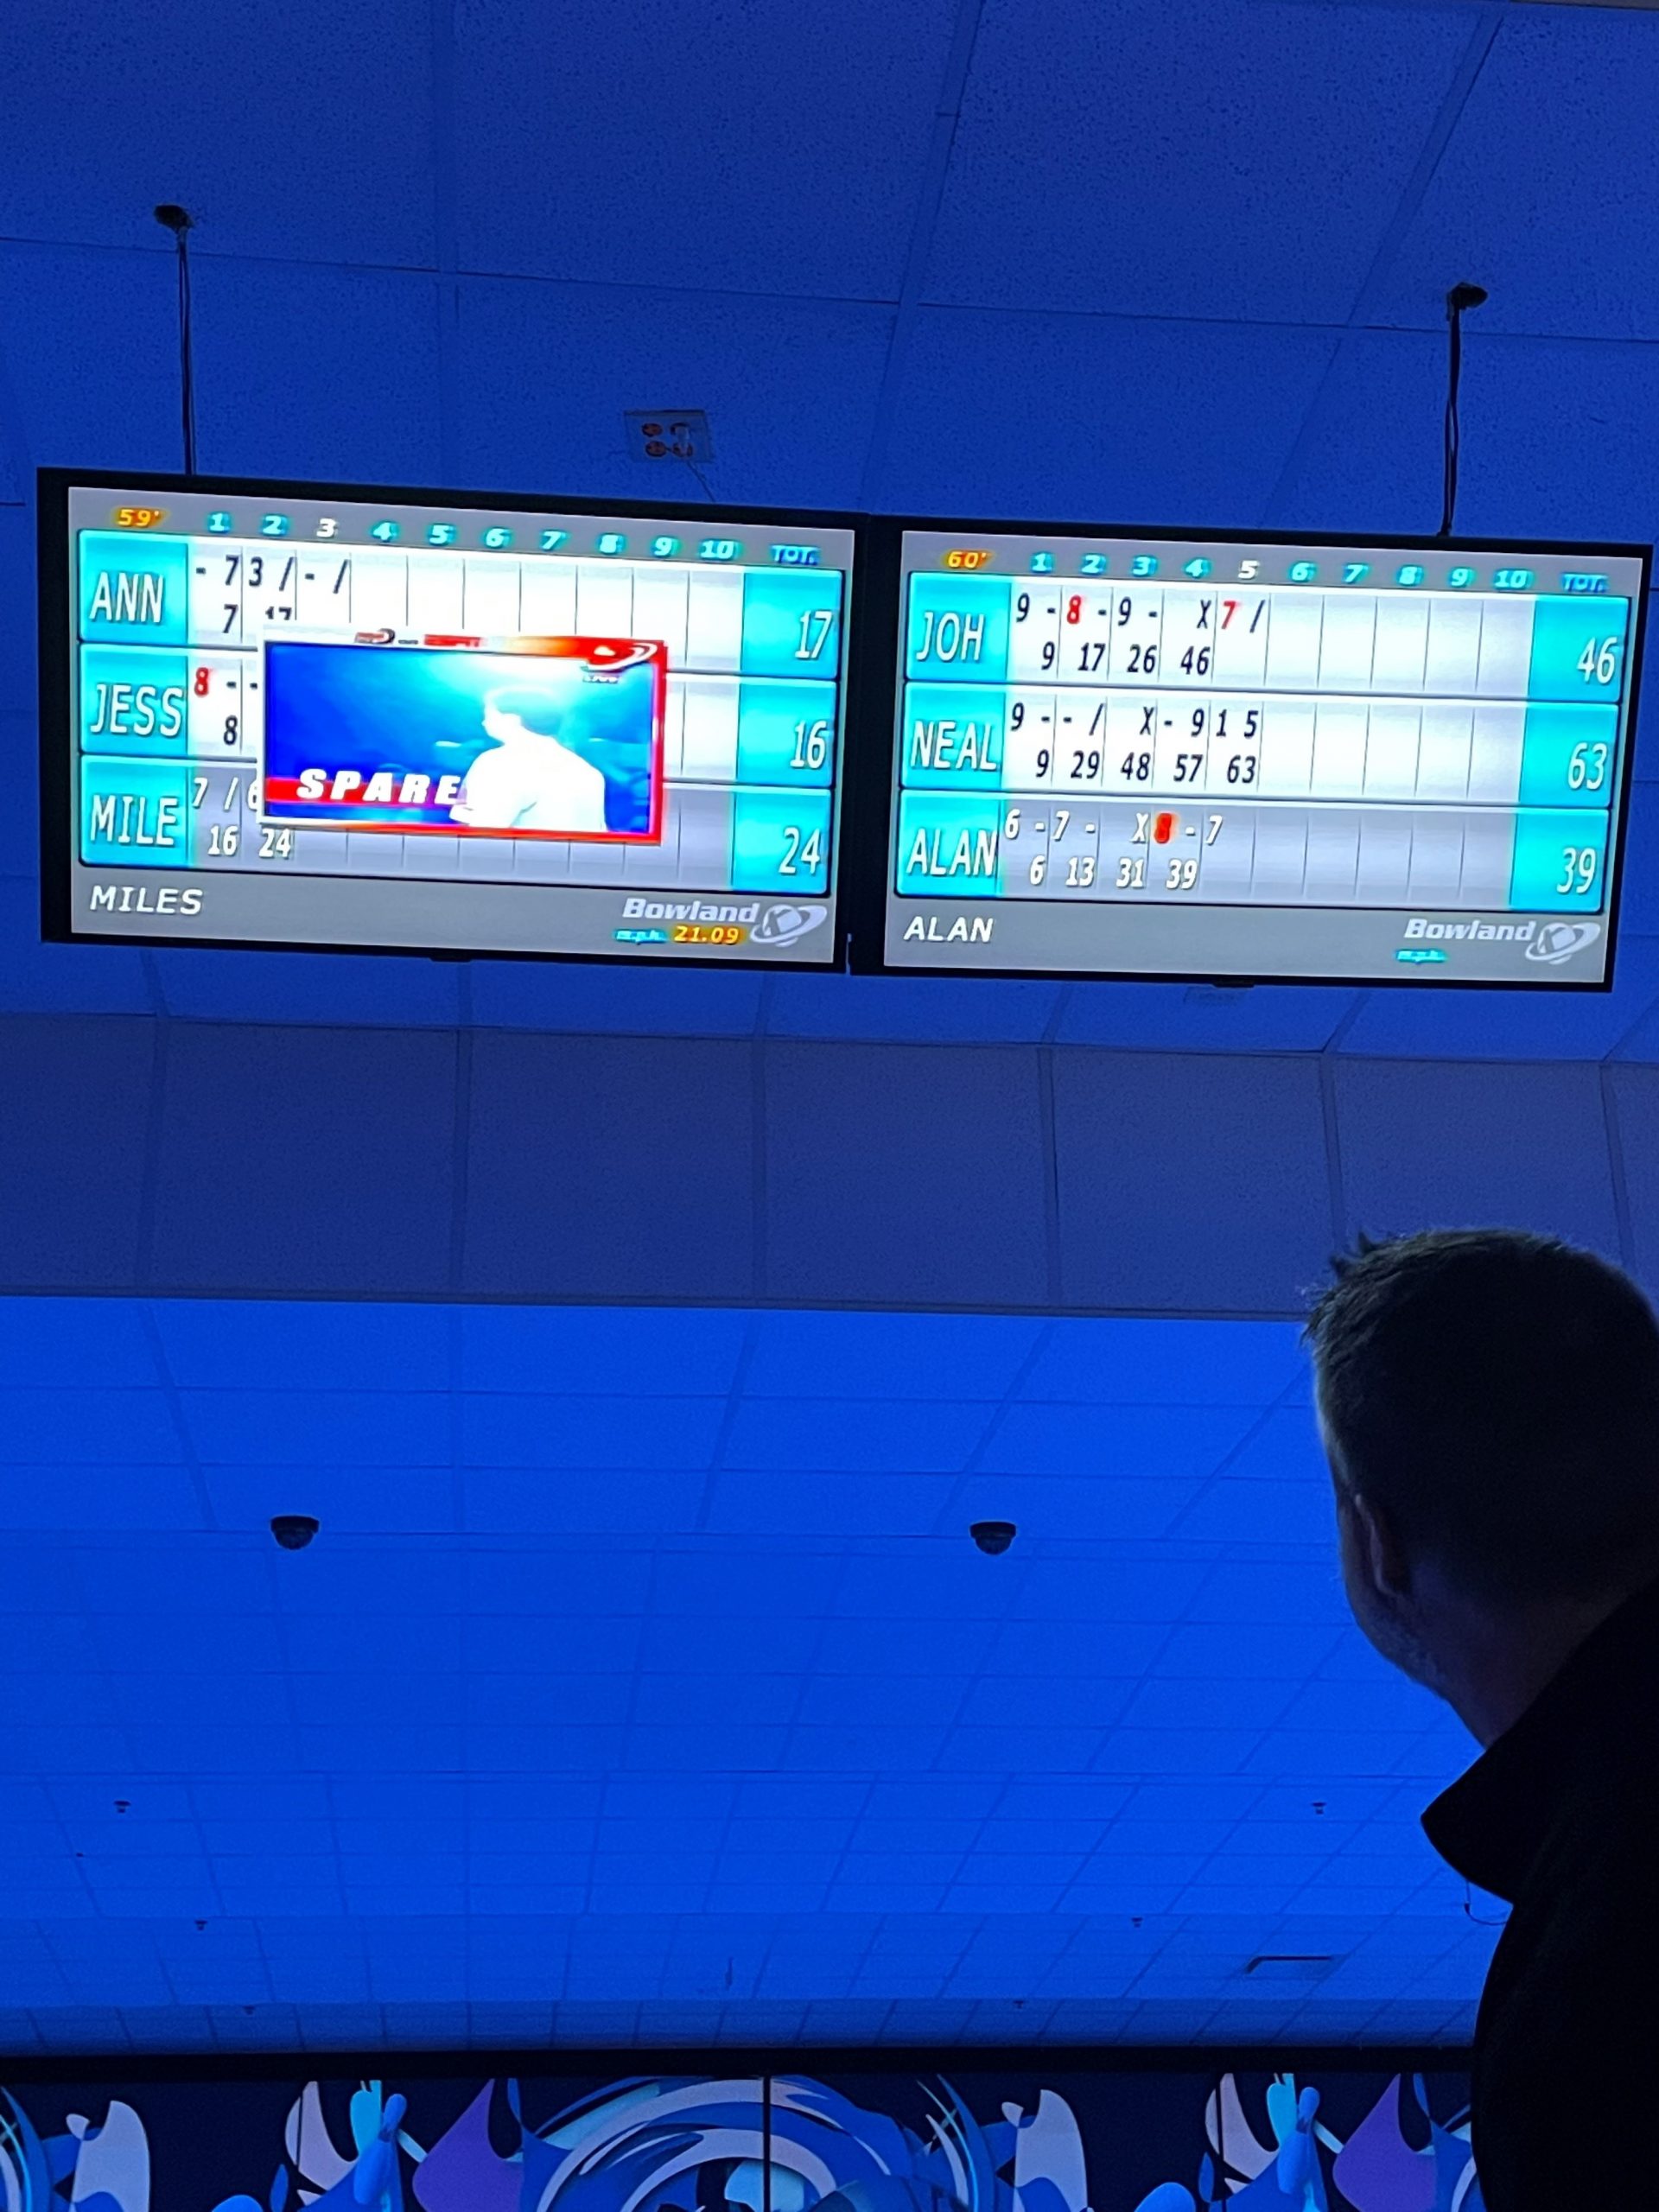 certapro bowling event scoreboard